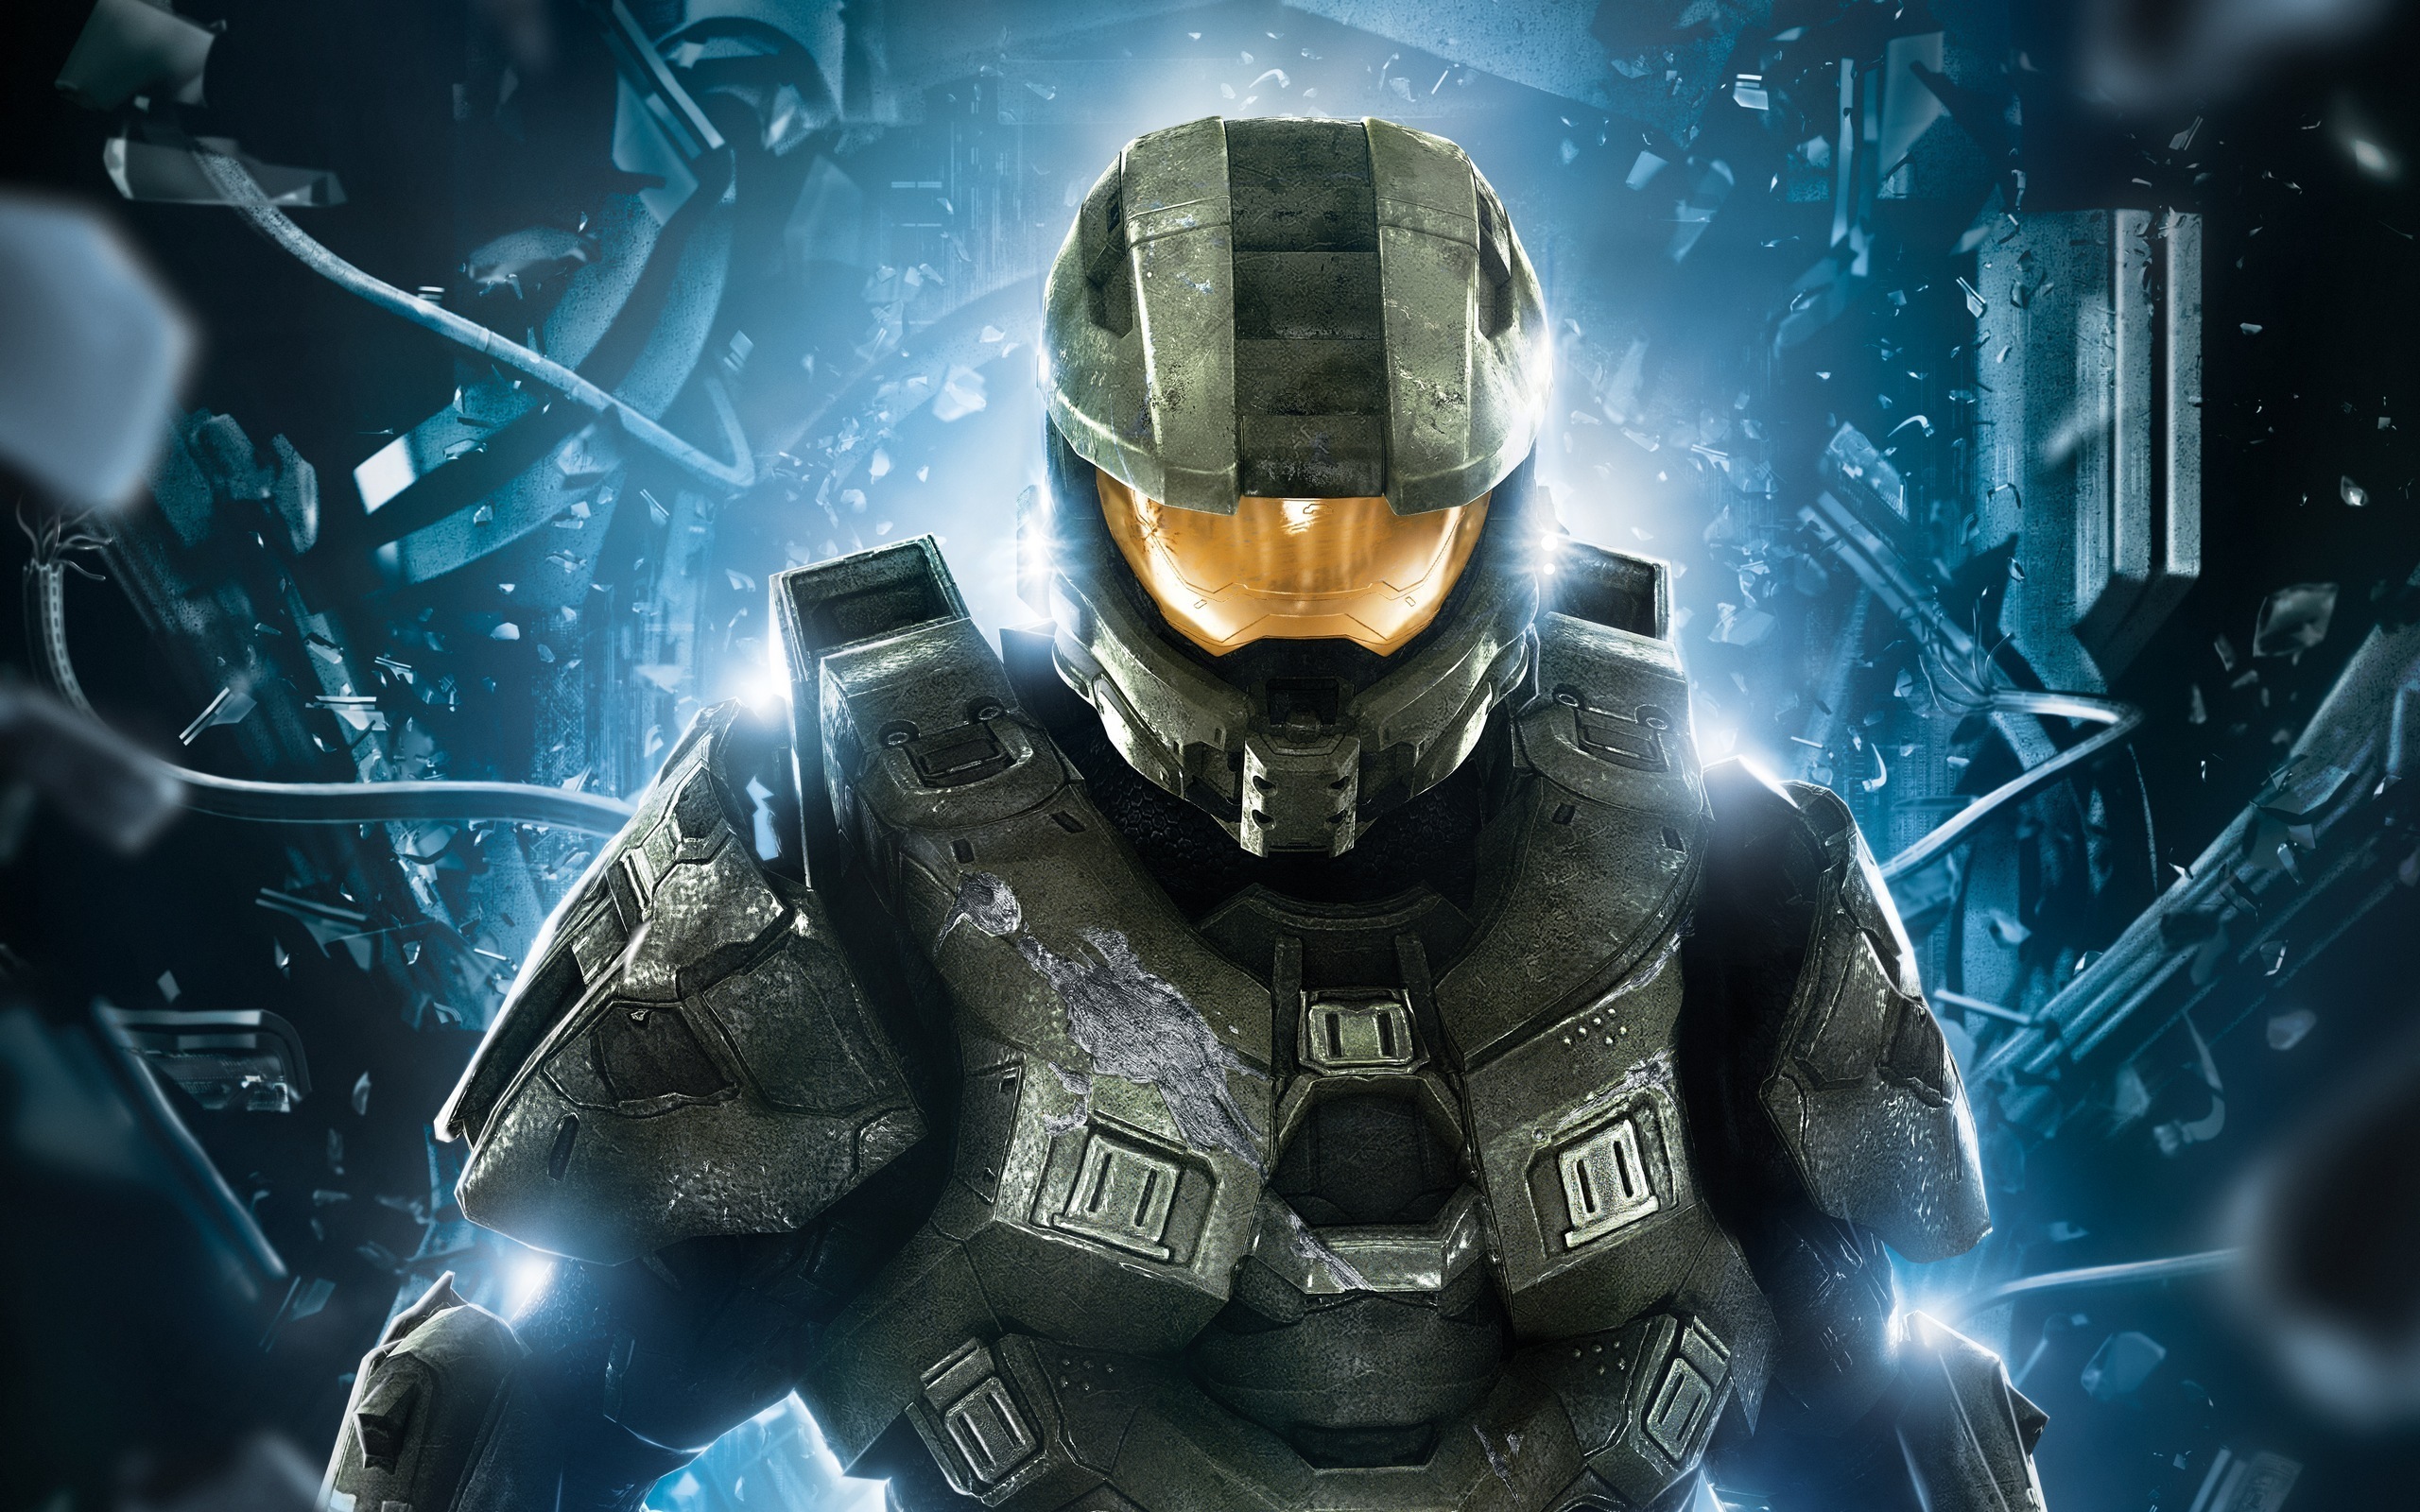 Halo”, a série baseada no icônico videogame Master Chief, foi